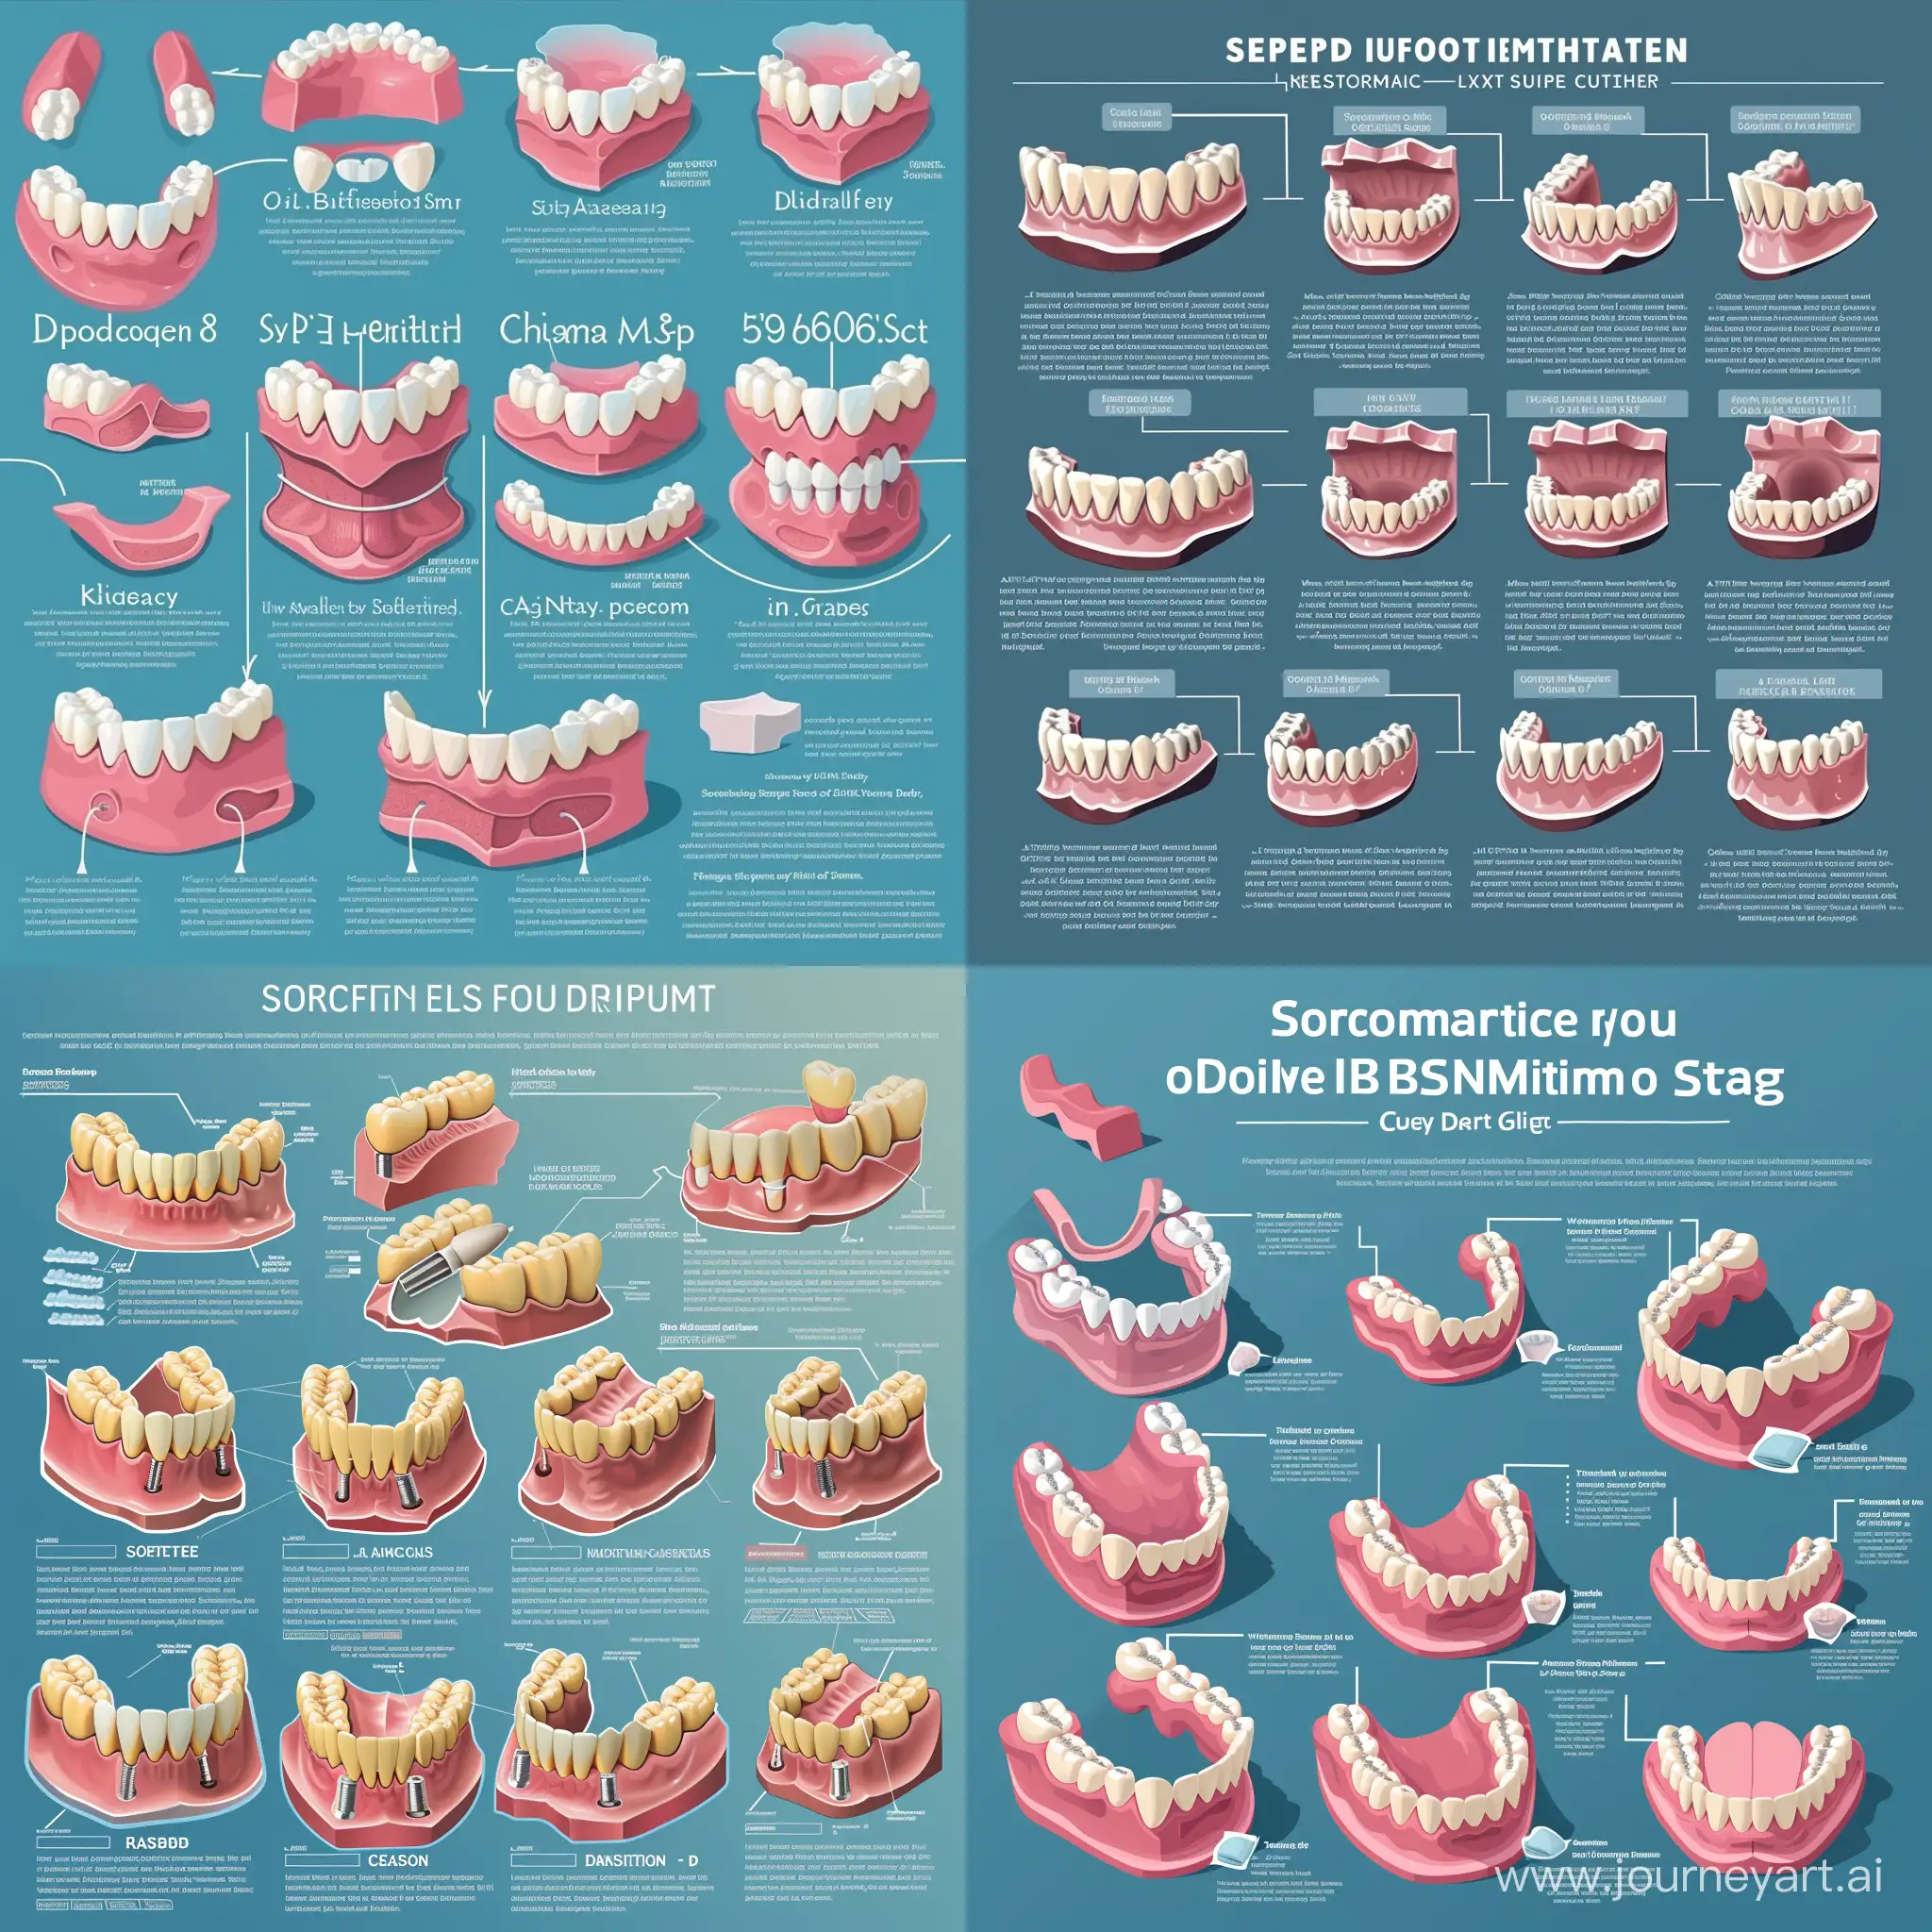 StepbyStep-Guide-for-Creating-Complete-Denture-Impression